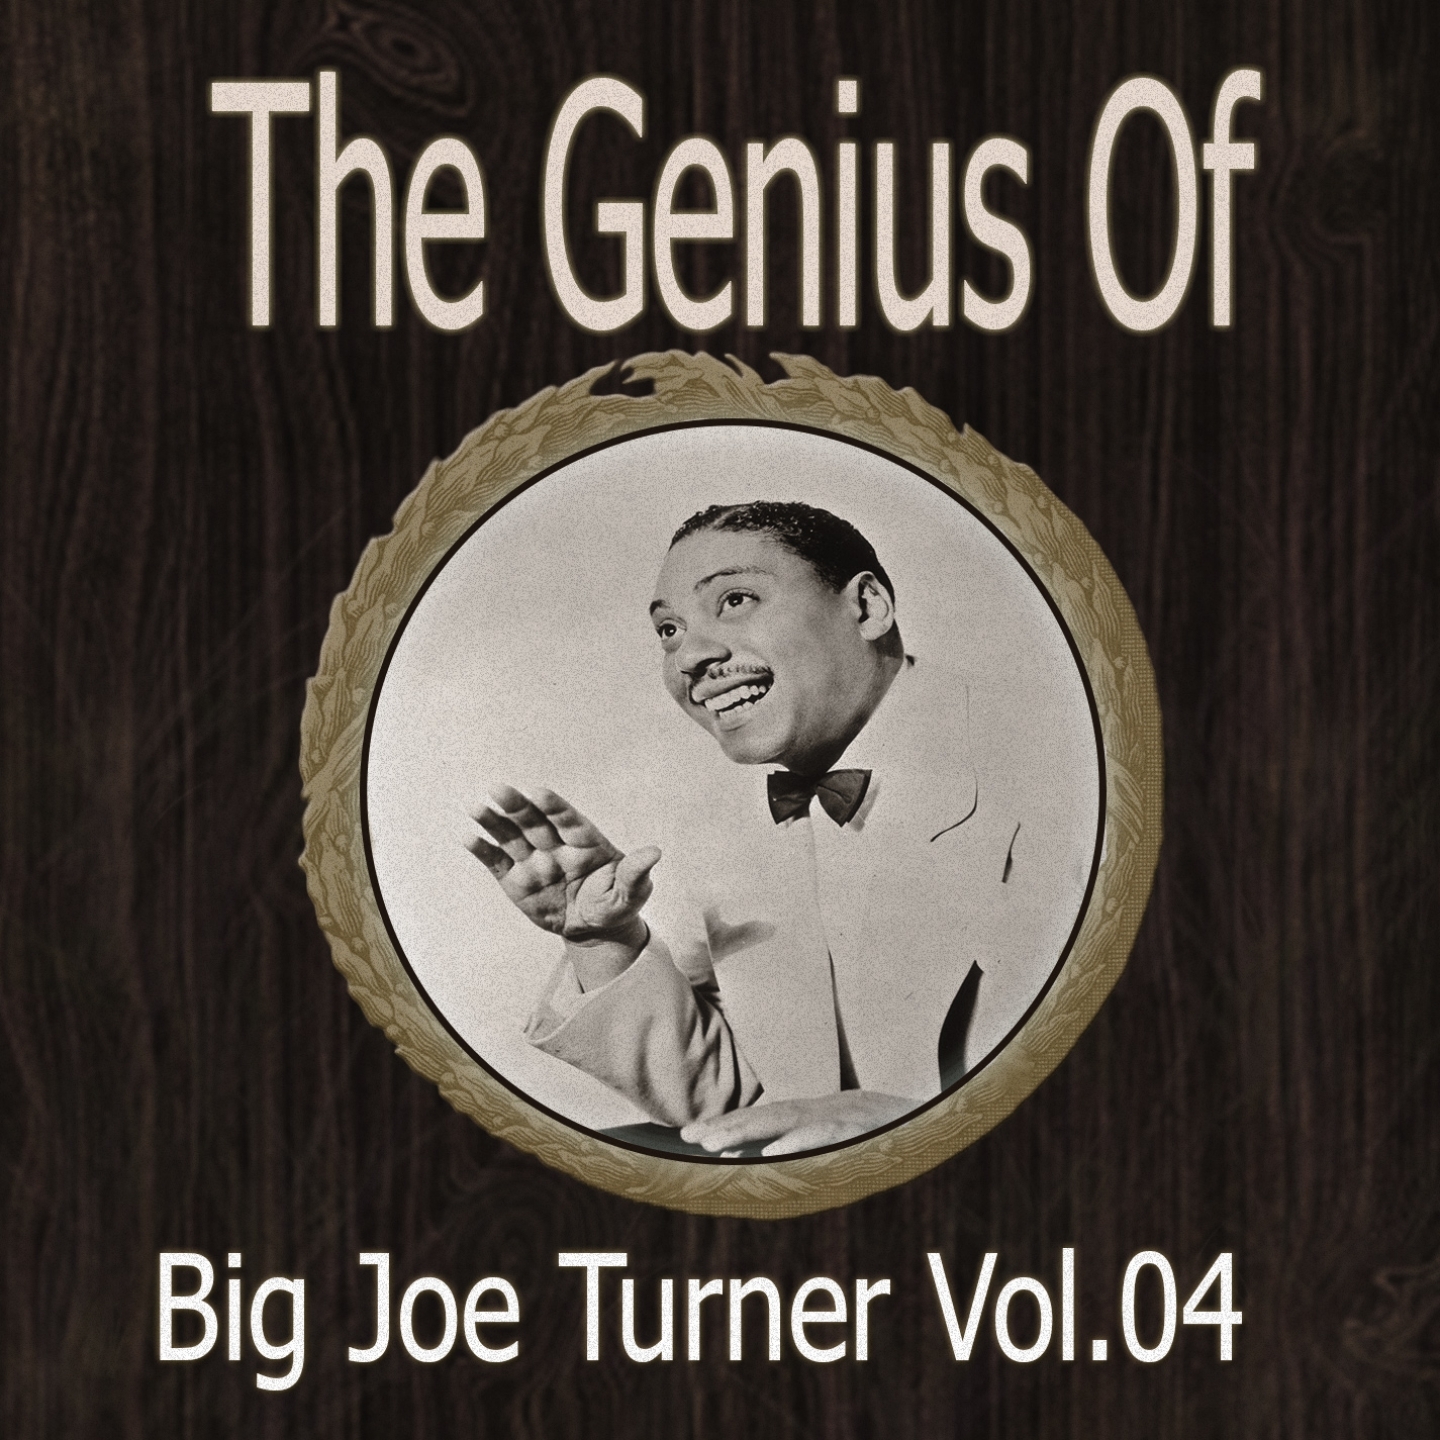 The Genius of Big Joe Turner Vol 04